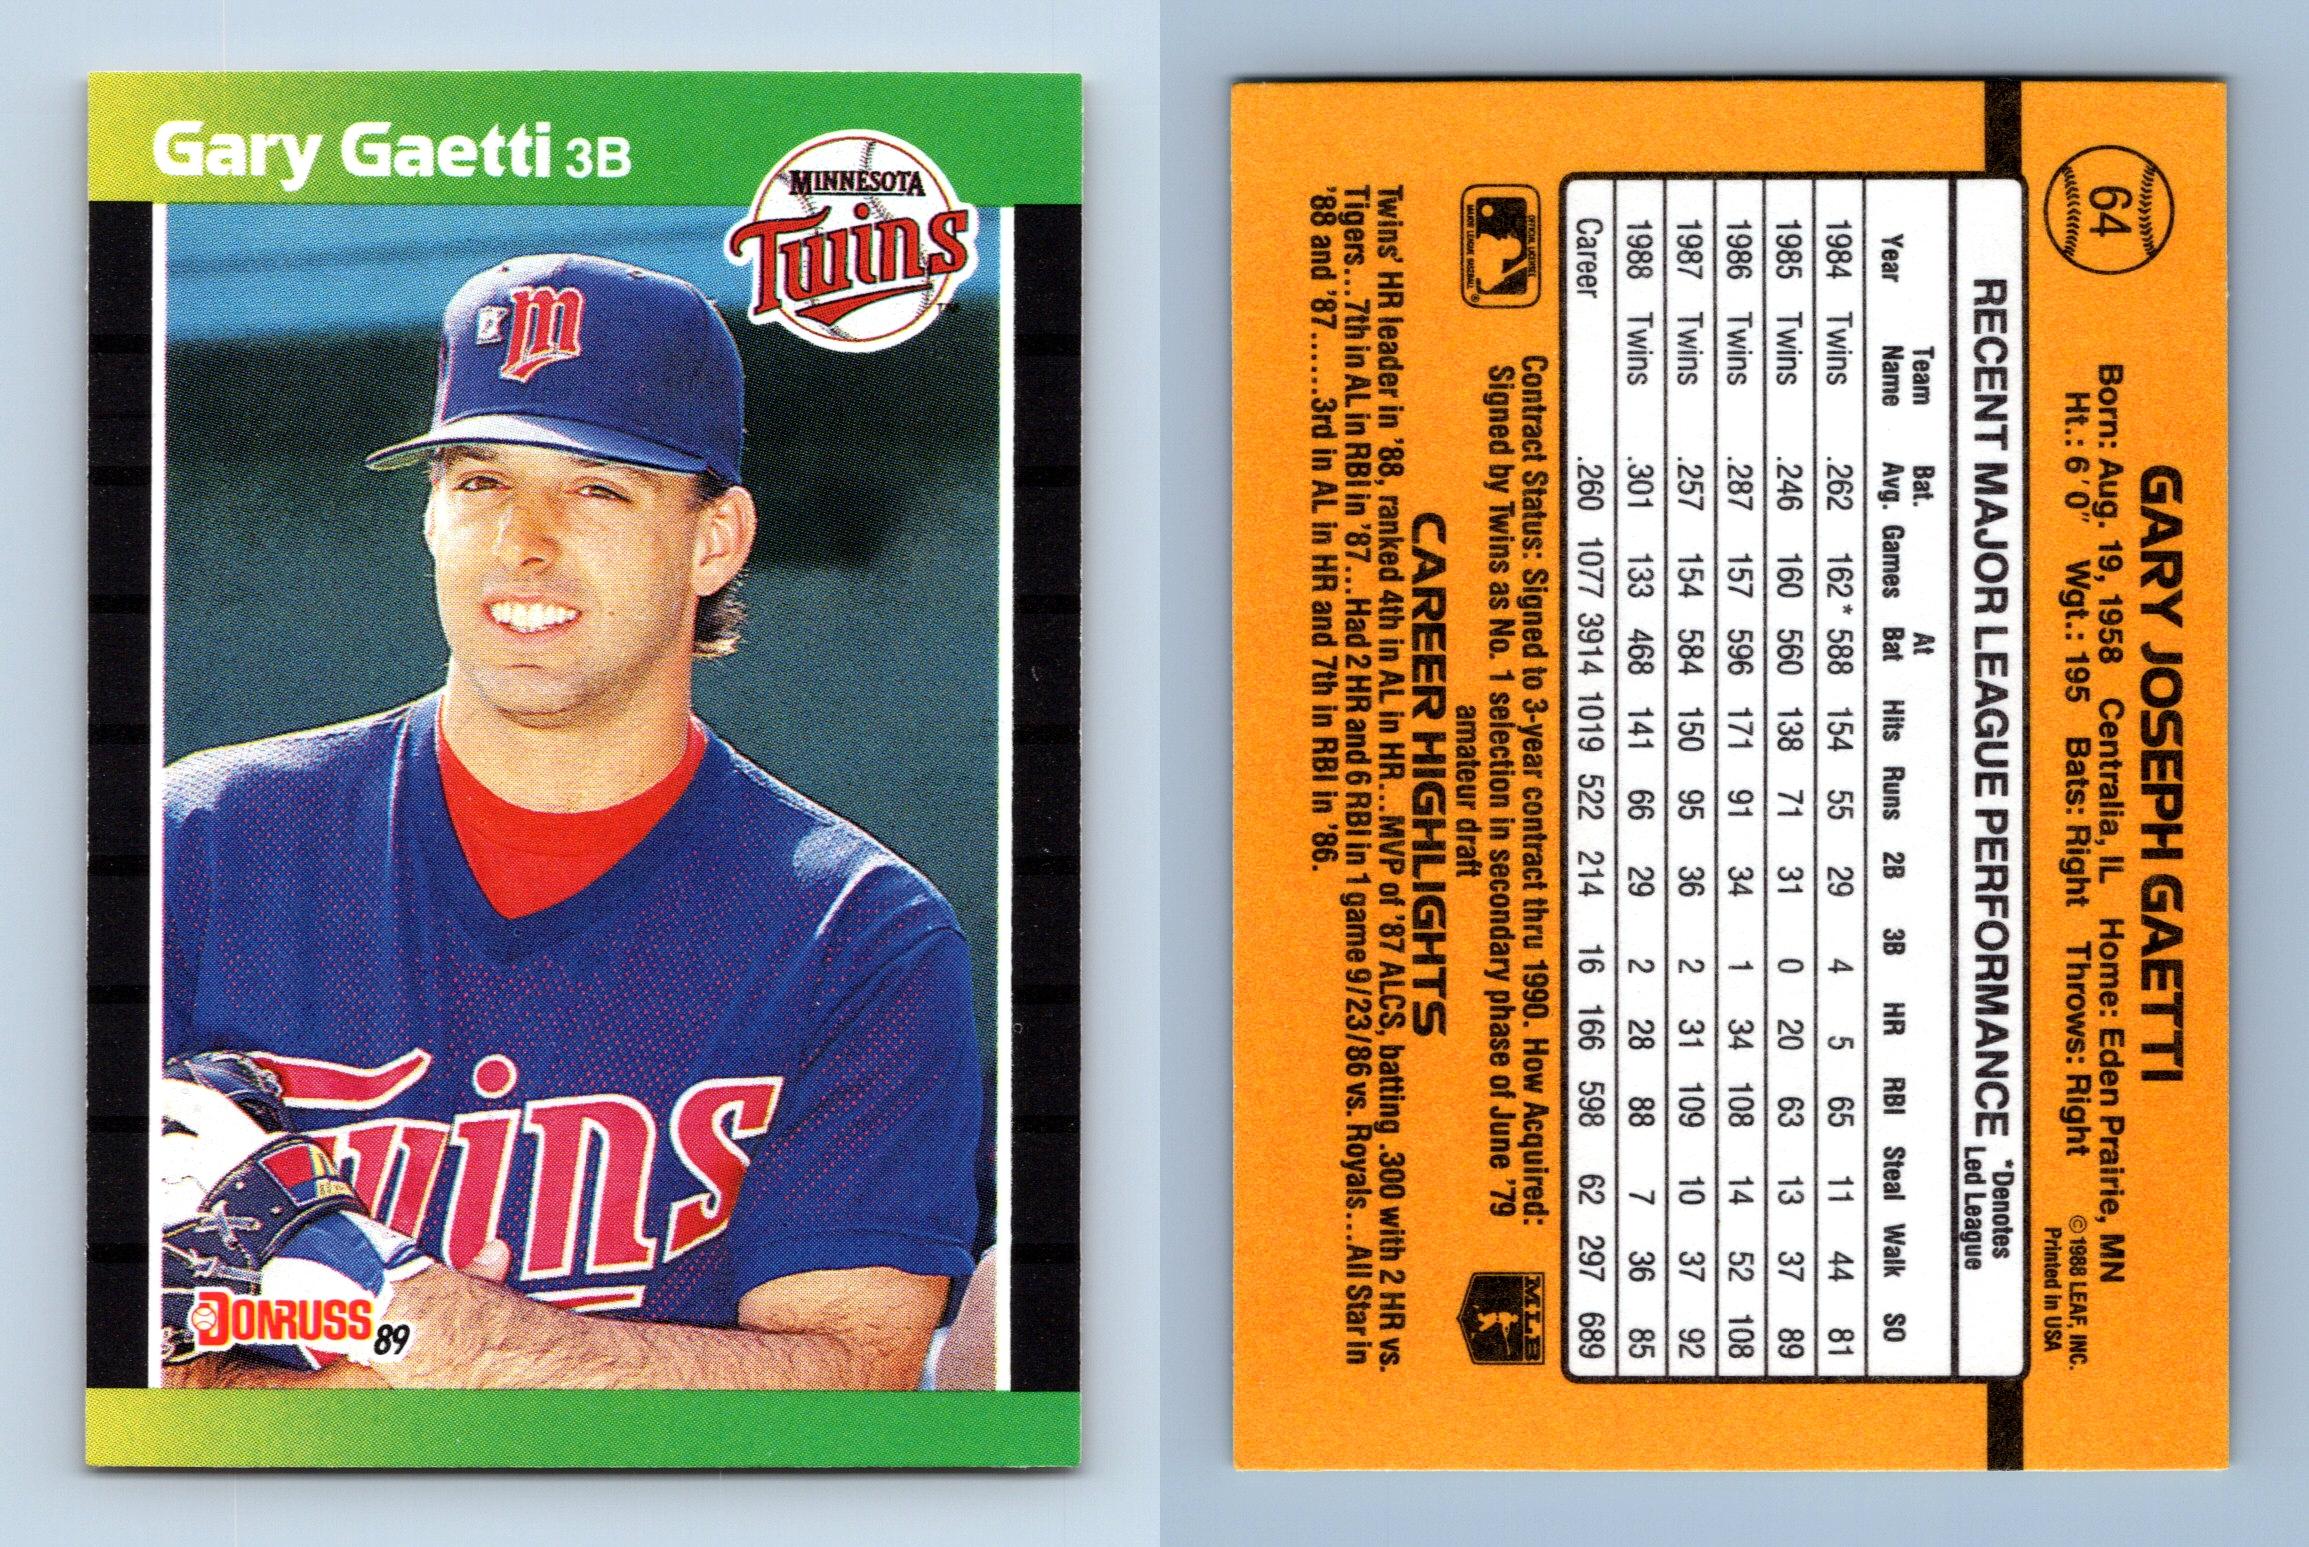  1989 Donruss Baseball Rookie Card #317 Chris Sabo